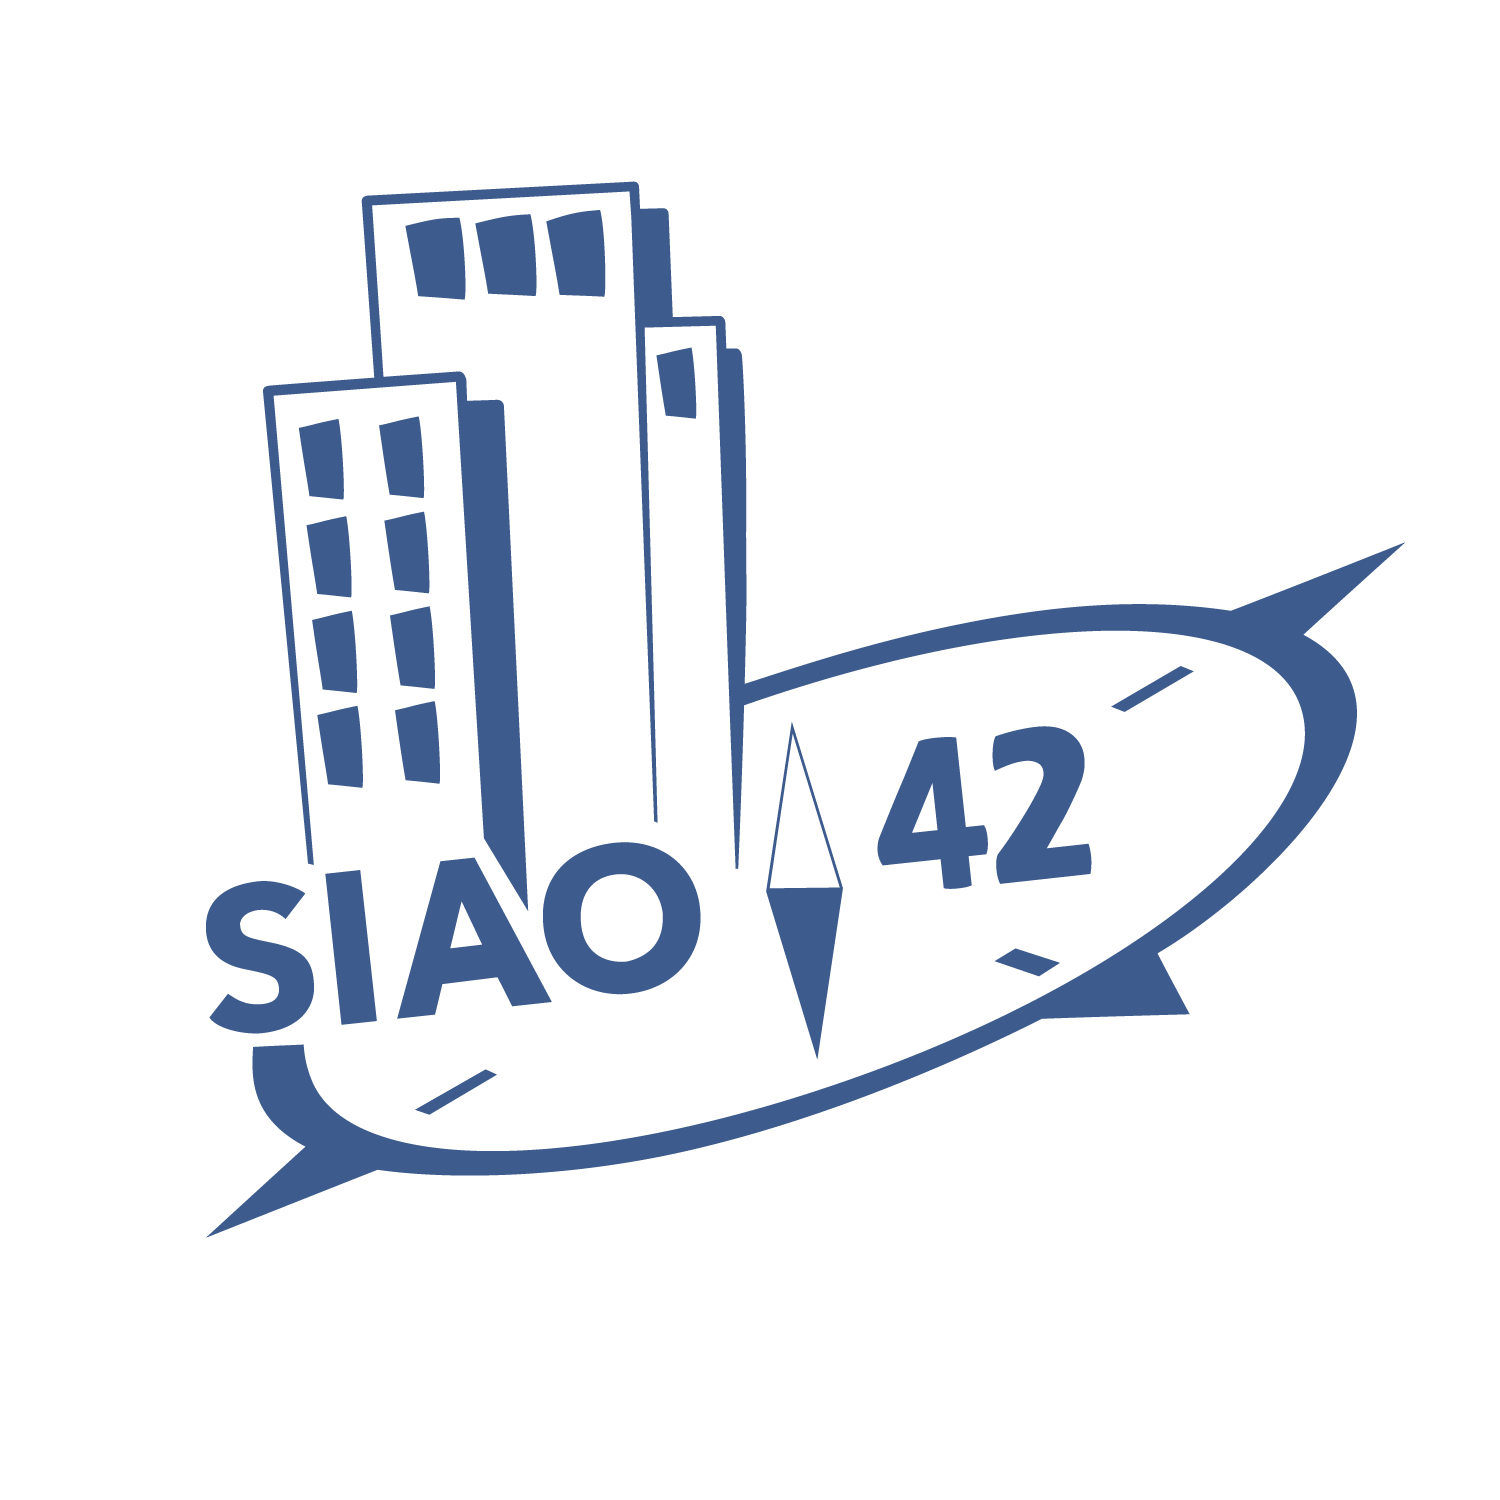 SIAO 42 Loire (logo)